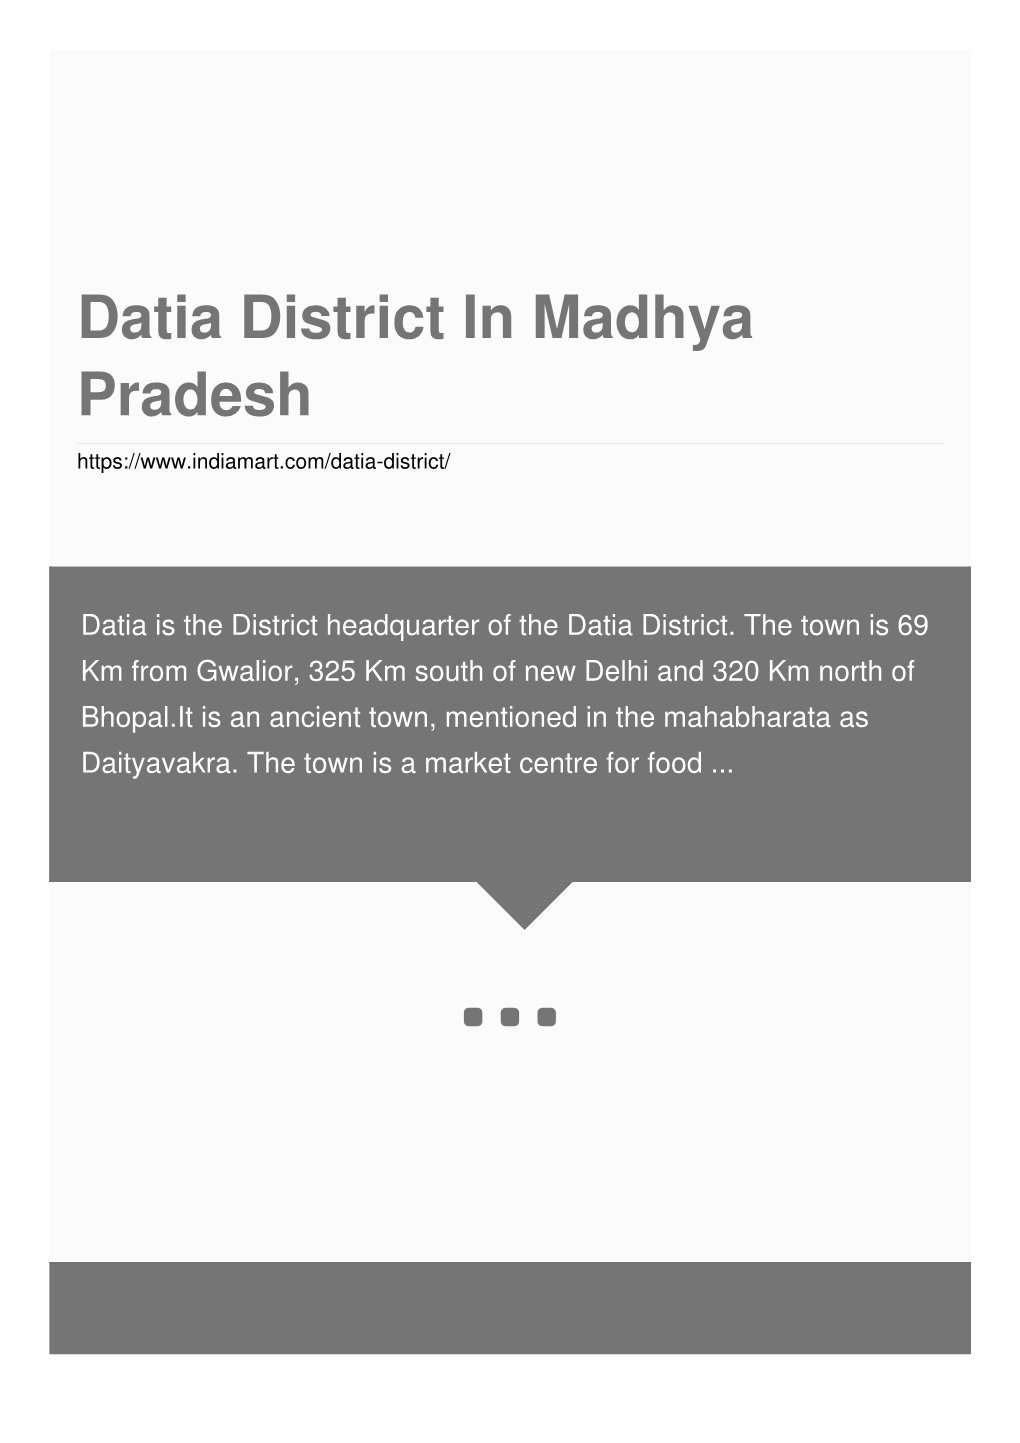 Datia District in Madhya Pradesh